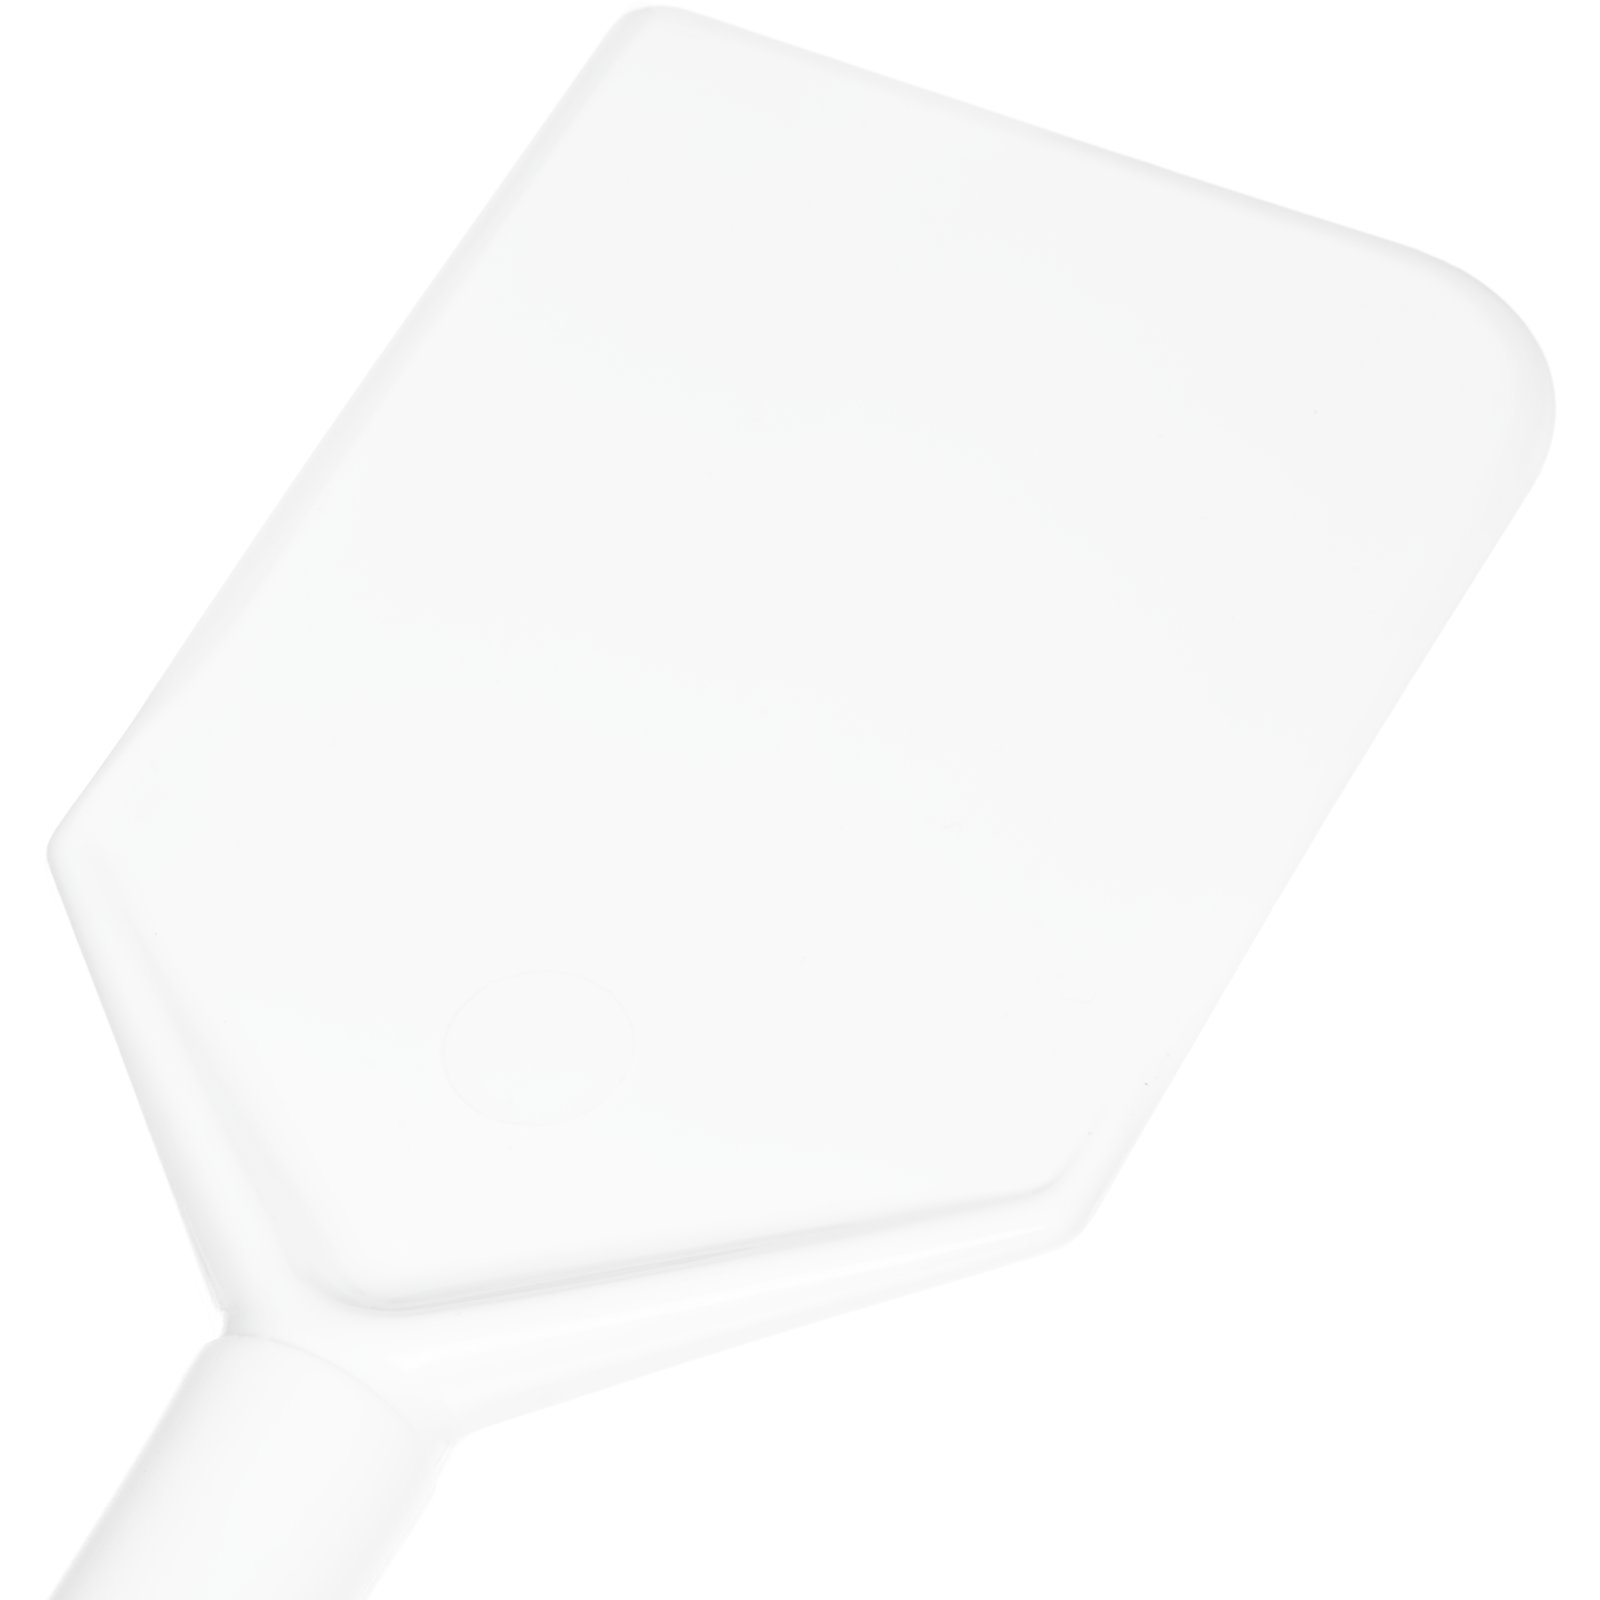 White HDPE Plastic Bowl Scraper - 5 1/8L x 3 7/8H